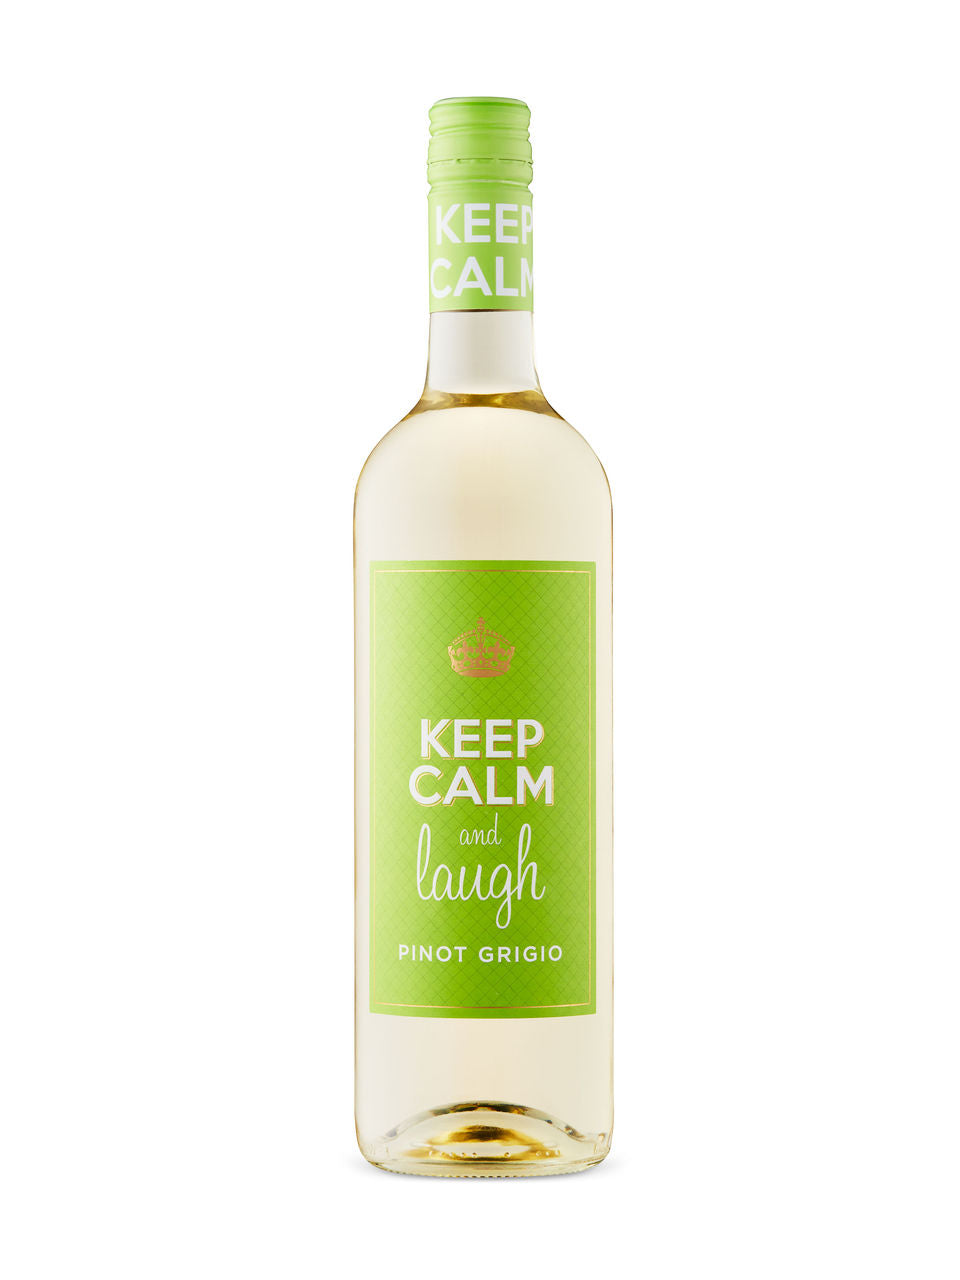 Keep Calm & Laugh Pinot Grigio 750 ml bottle